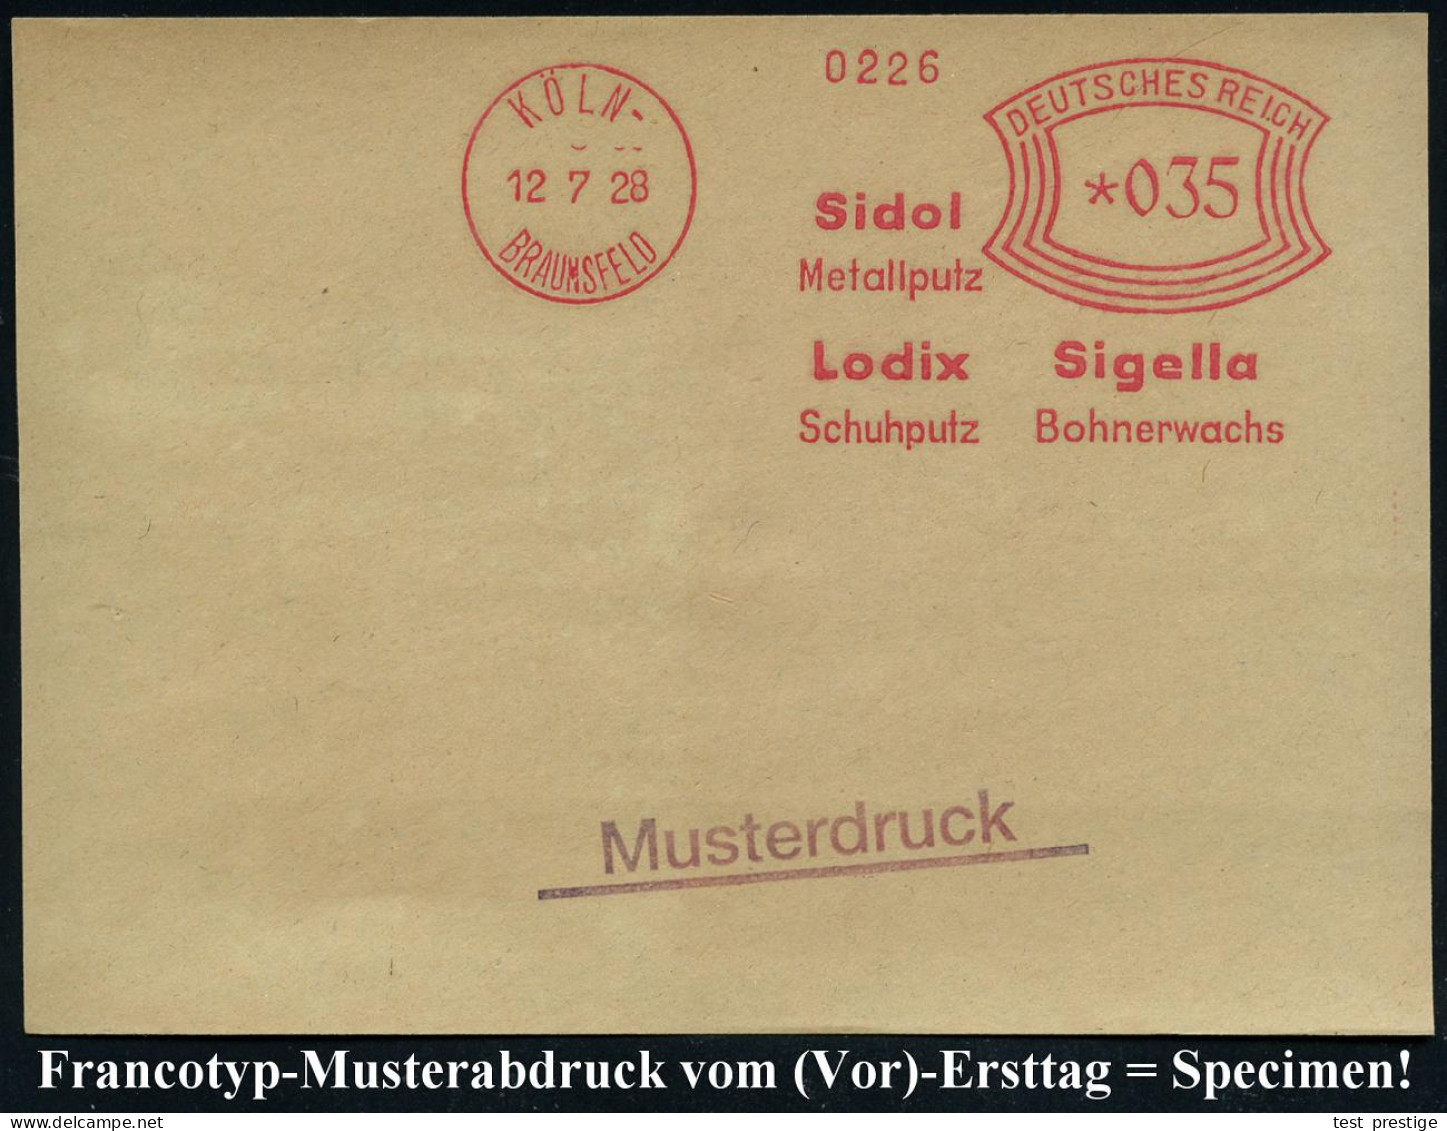 KÖLN-/ BRAUNSFELD/ Sidol/ Metallputz/ Lodix/ Schuhputz/ Sigella/ Bohnerwachs 1928 (12.7.) AFS-Musterabdruck Francotyp "B - Chemie